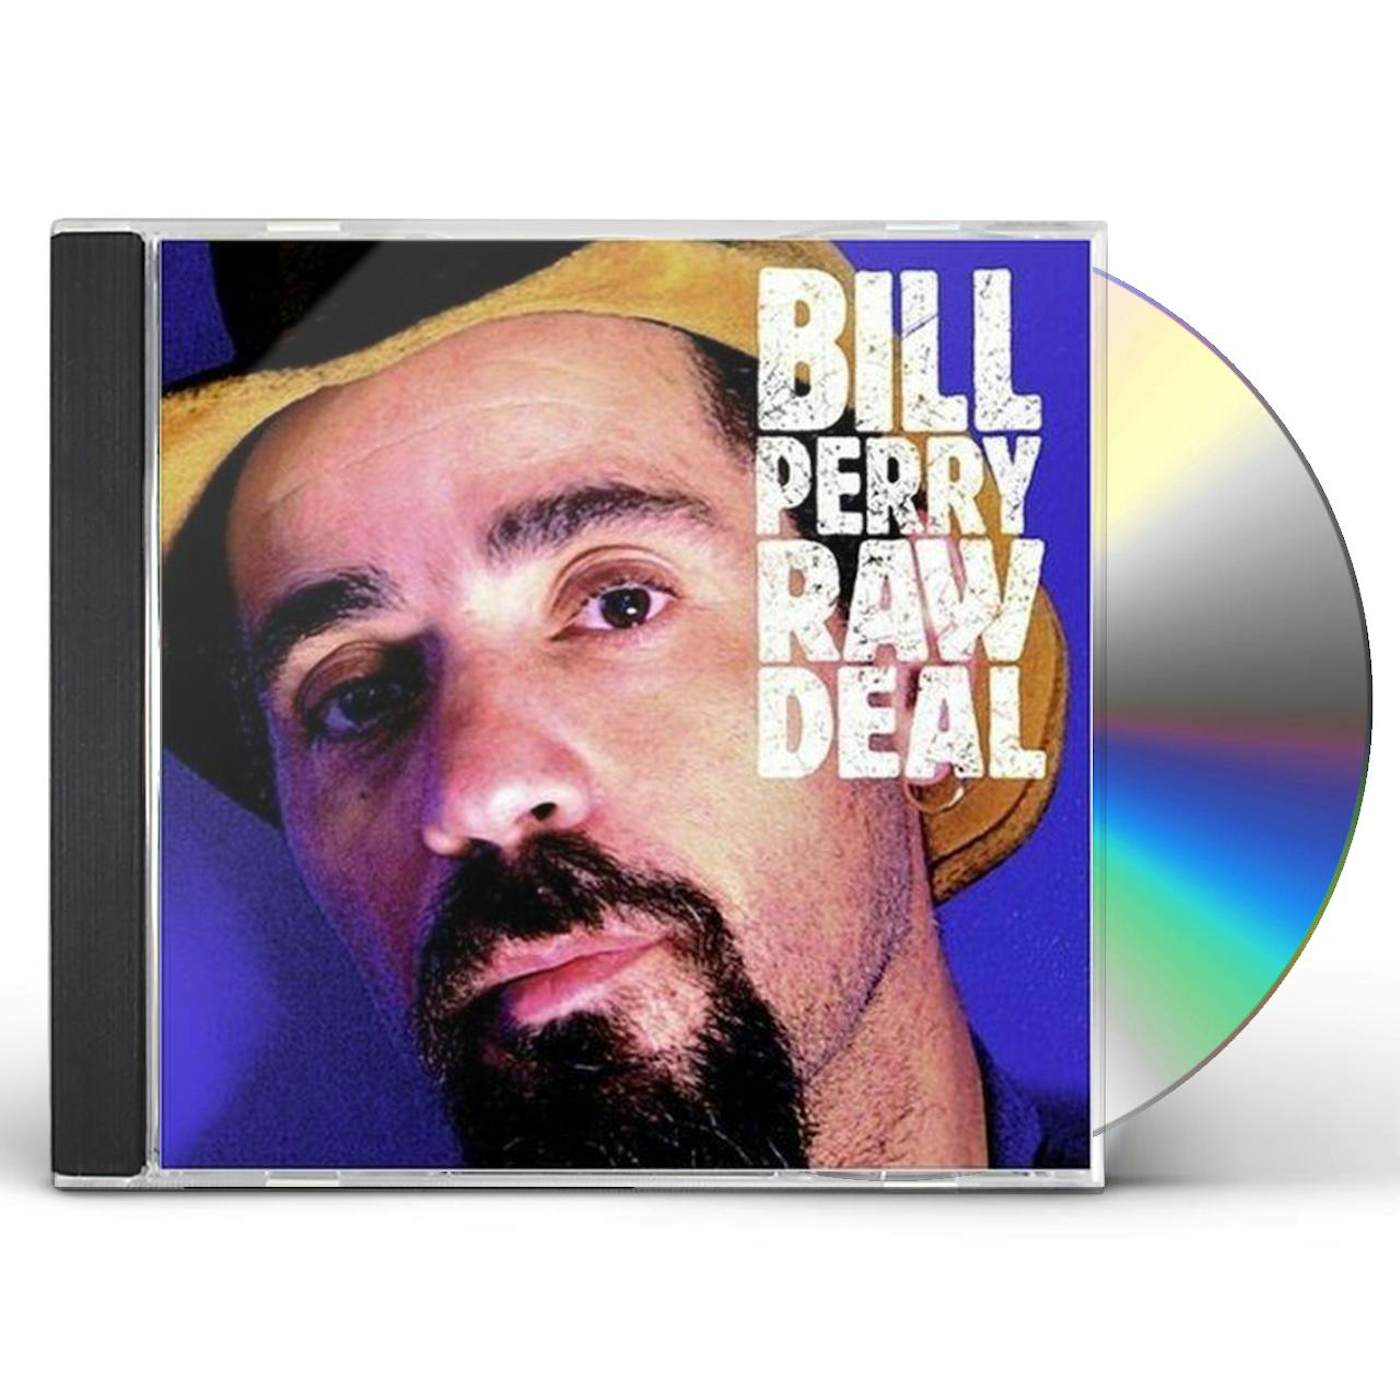 Bill Perry RAW DEAL CD